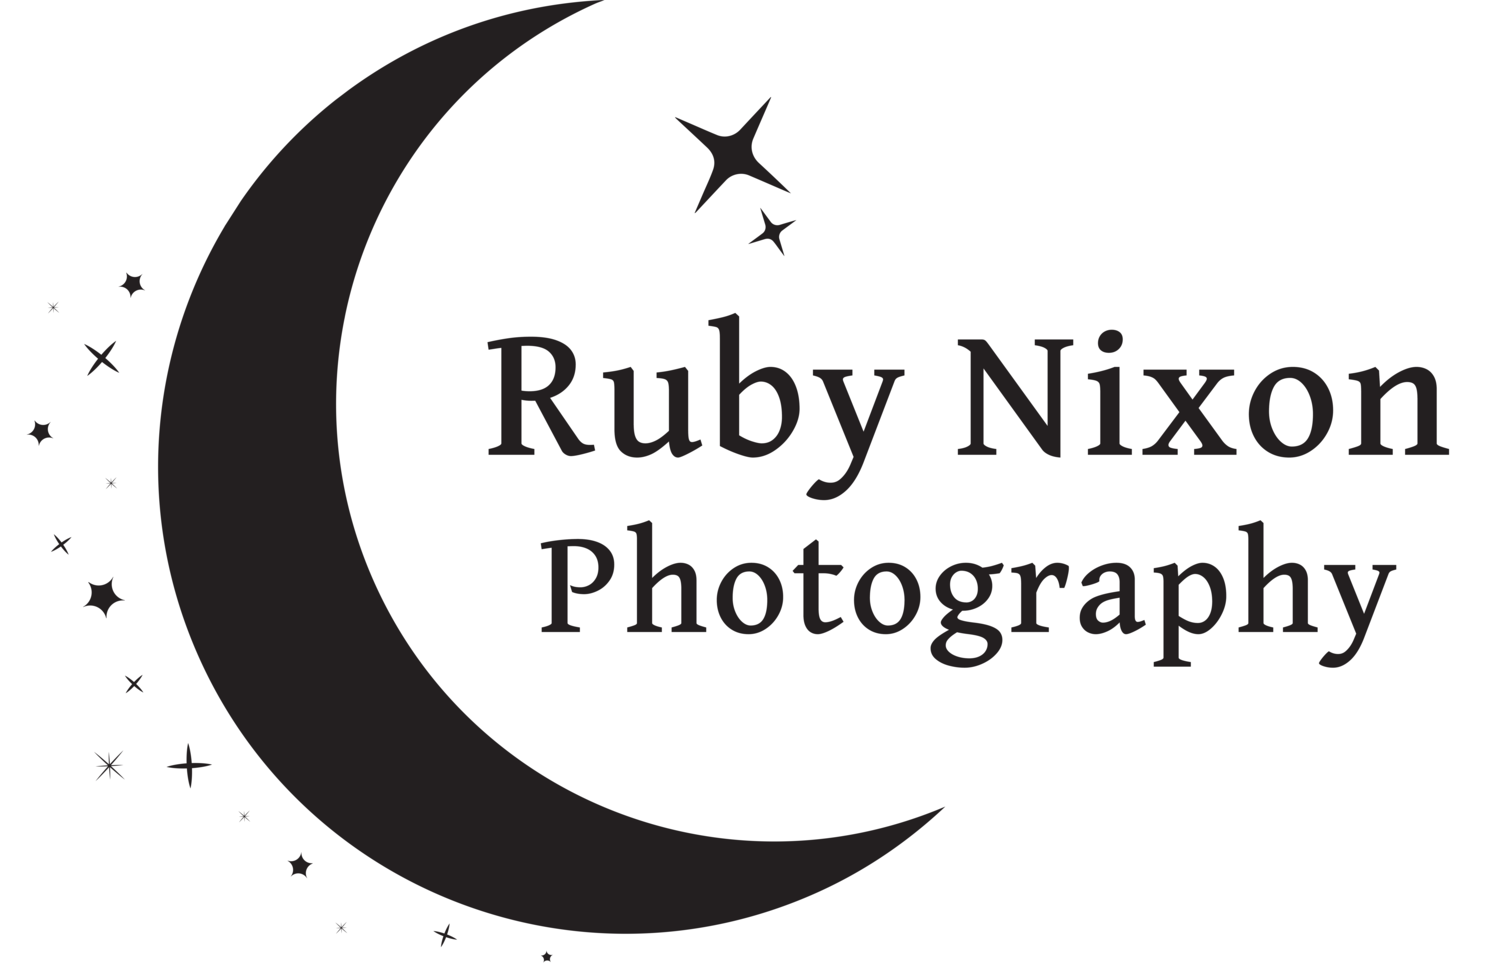 Ruby Nixon Photography